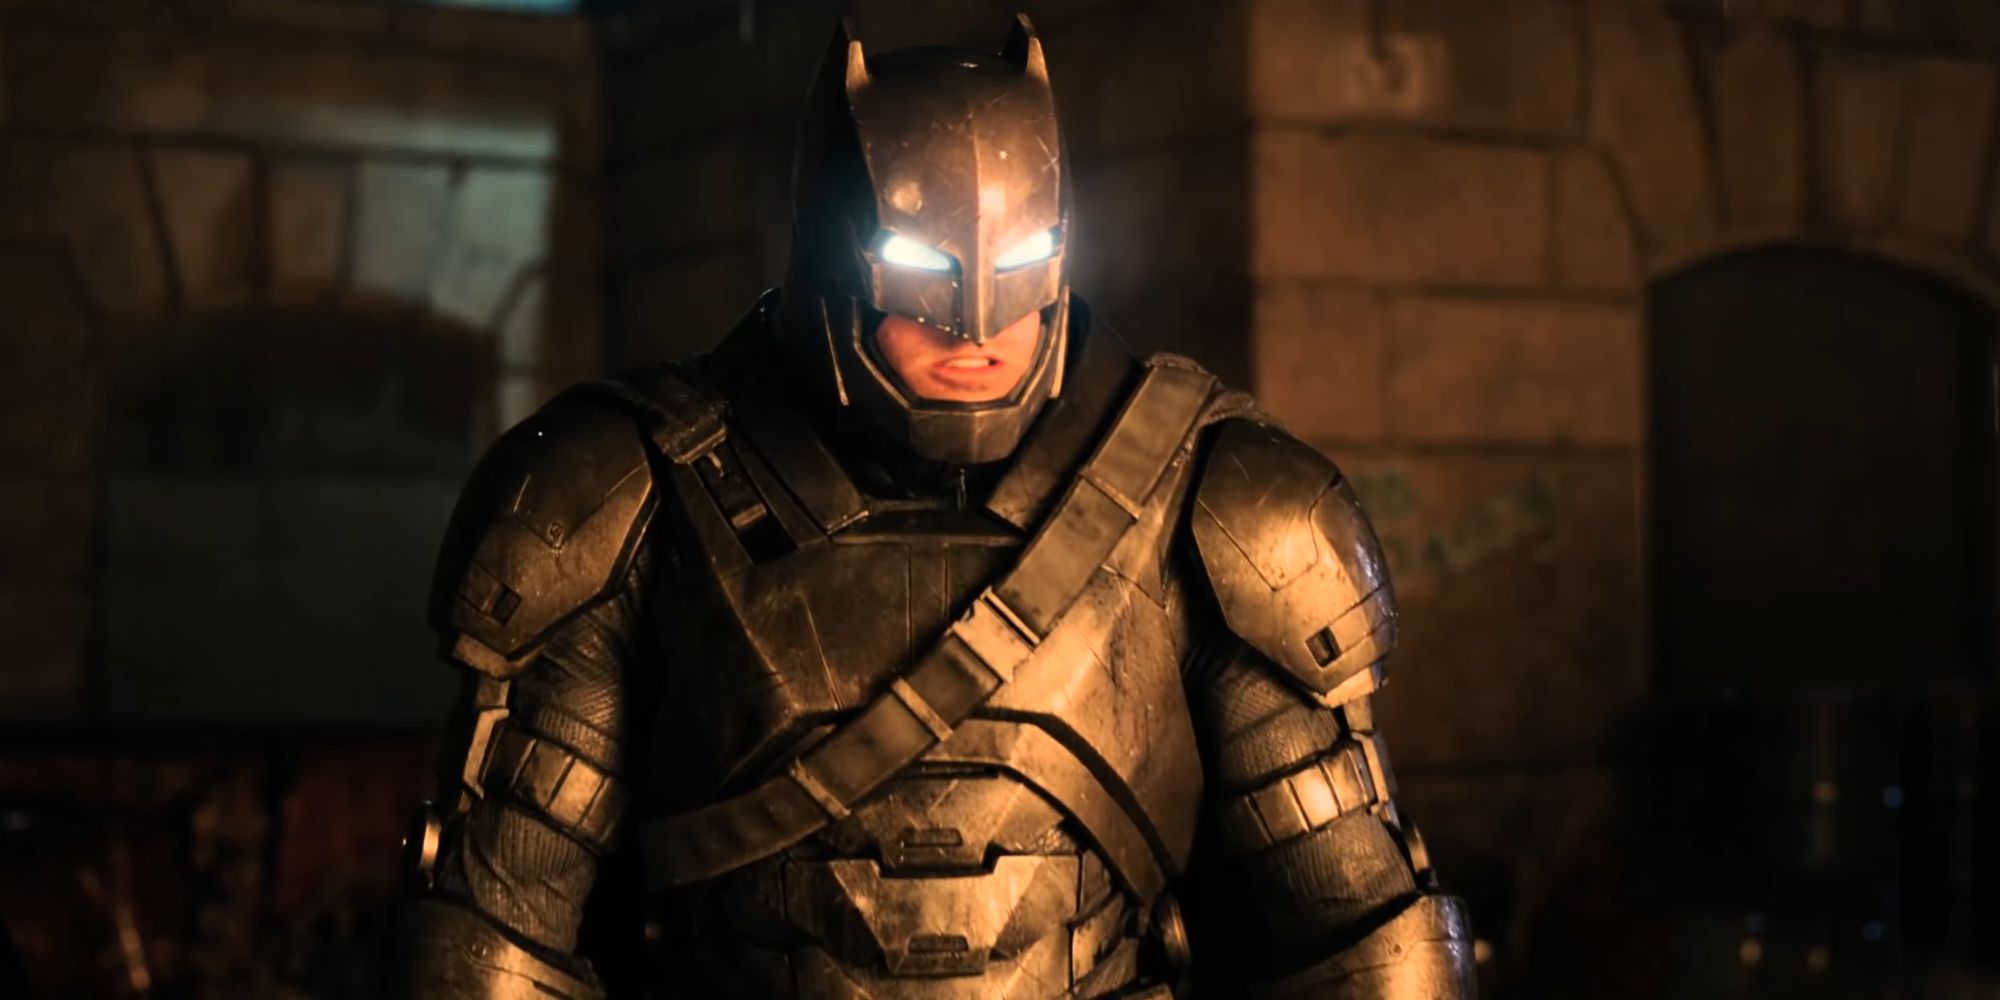 Batman in the armored Batsuit in Batman V Superman Dawn Of Justice